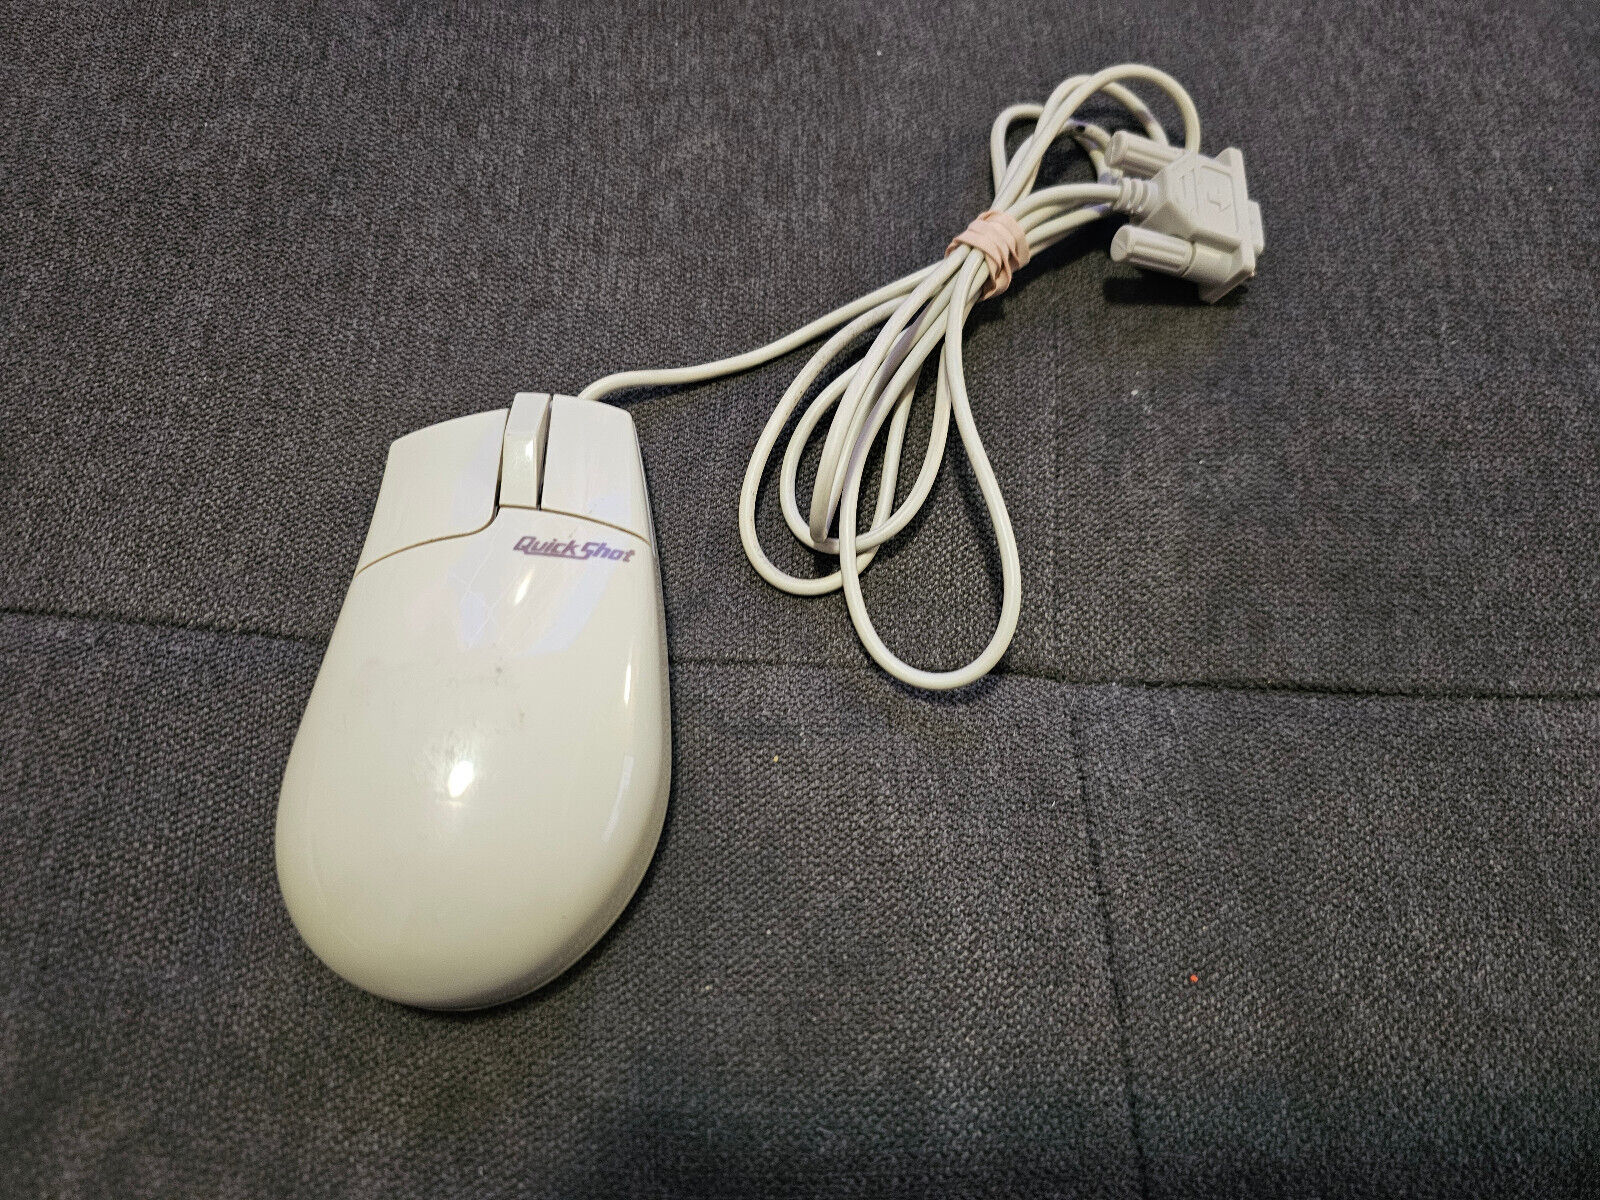 OEM Vintage QuickShot Mouse QS211  FOR  ATARI  AMIGA WORKING.